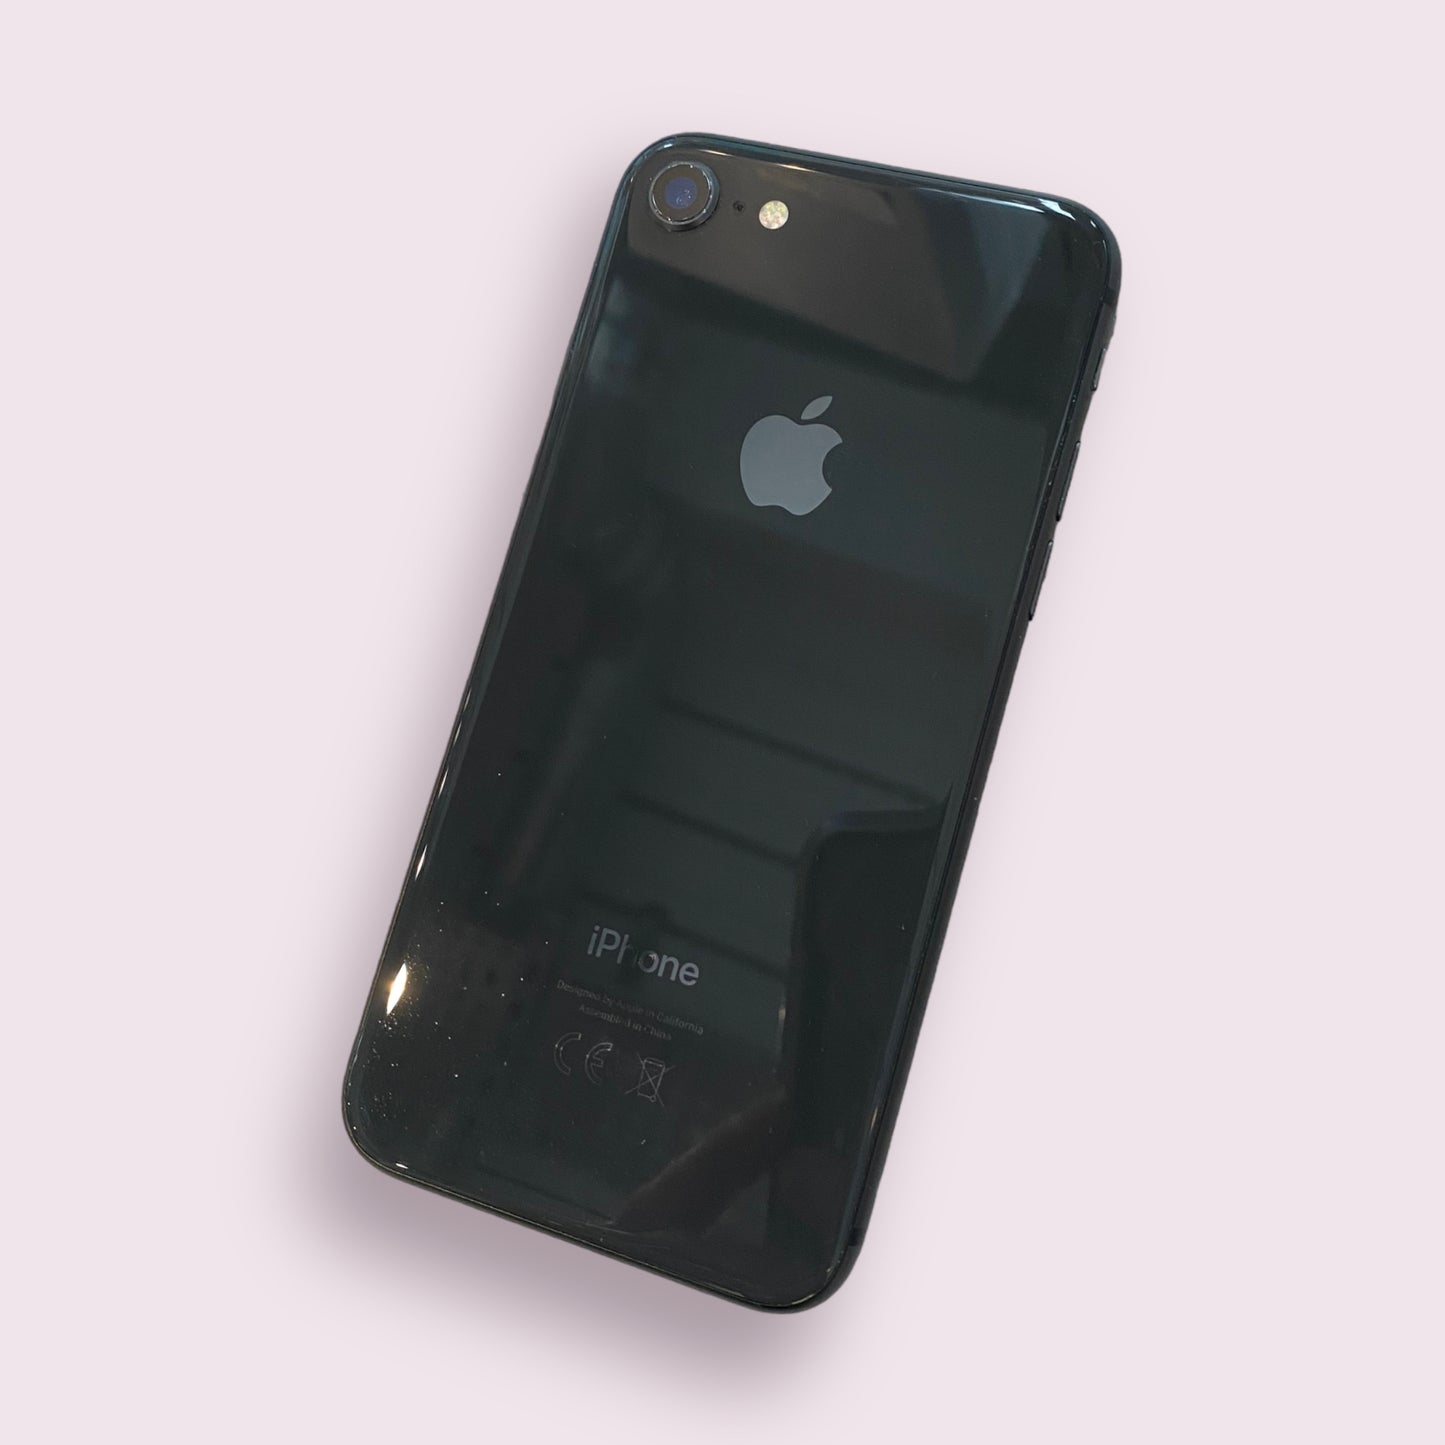 Apple iPhone 8 64GB Space Grey Unlocked - Grade B + - Battery Health 100%